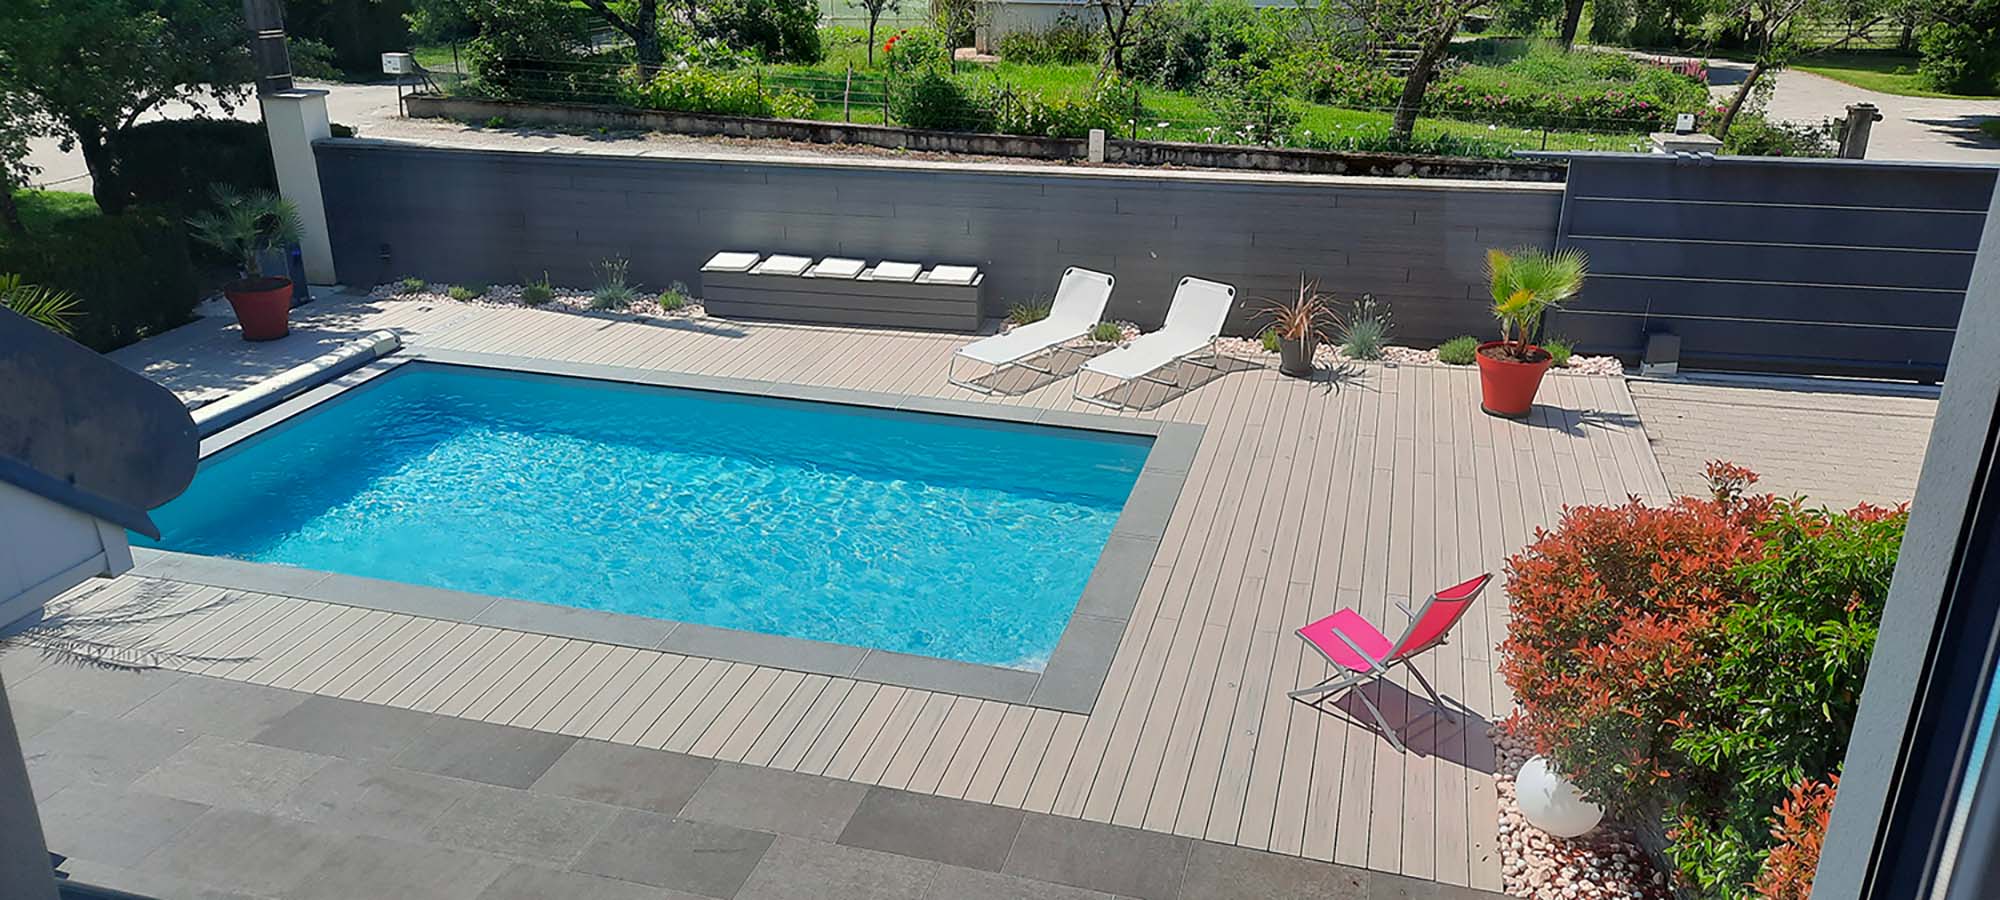 piscine avec terrasse composite teinte sable et bardage composite ultraprotect couleur anthra